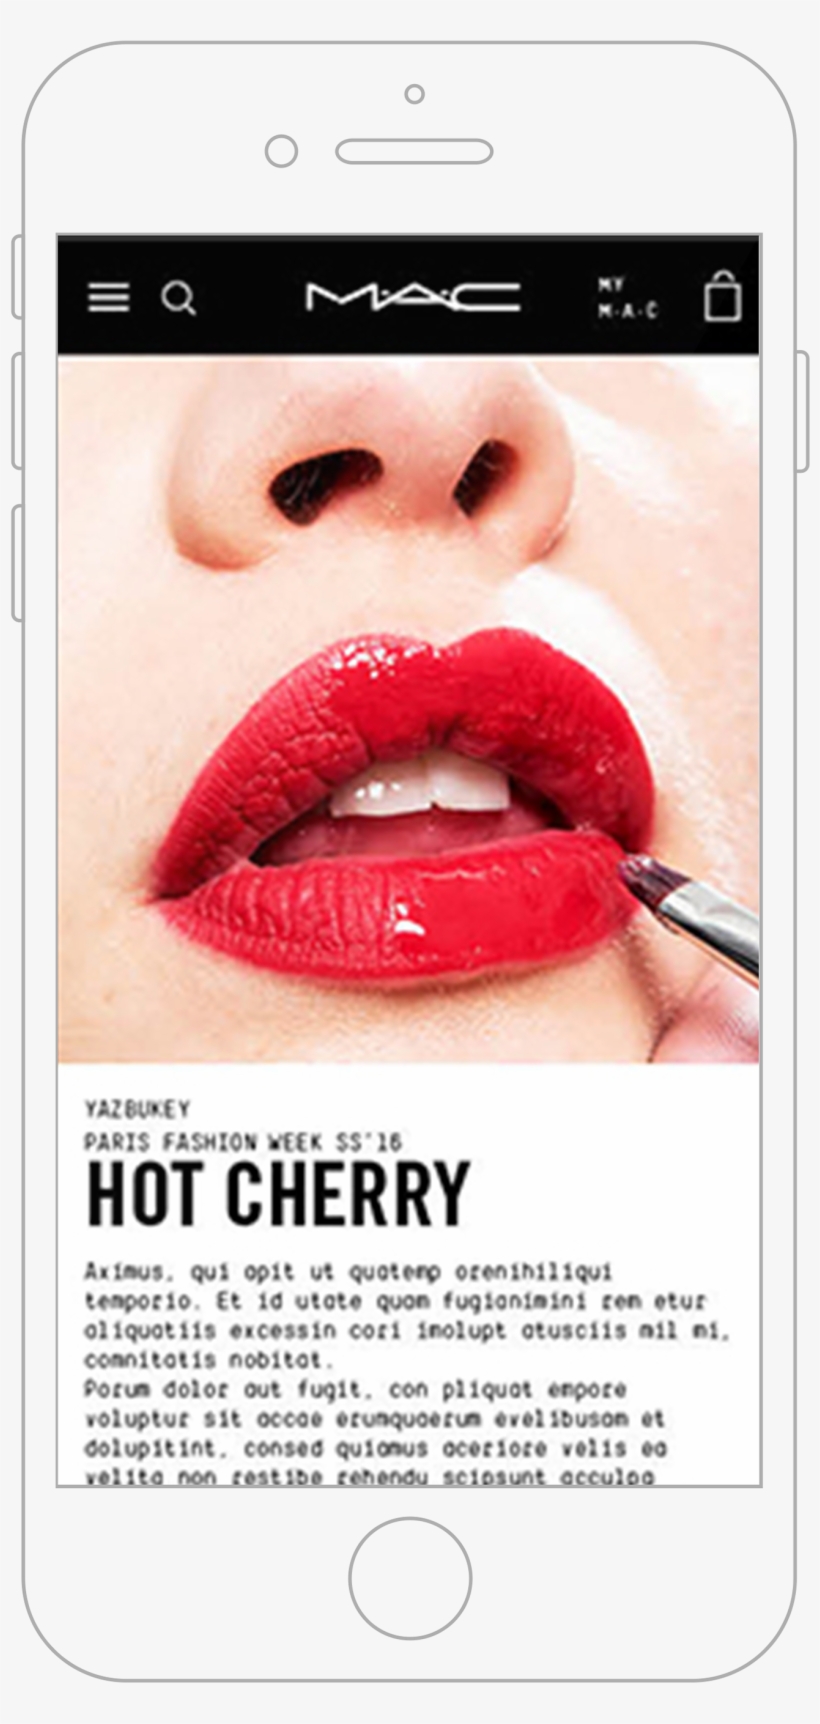 Landing Page Designed For Fashion Week Make-up Trends - Lip Care, transparent png #7821173